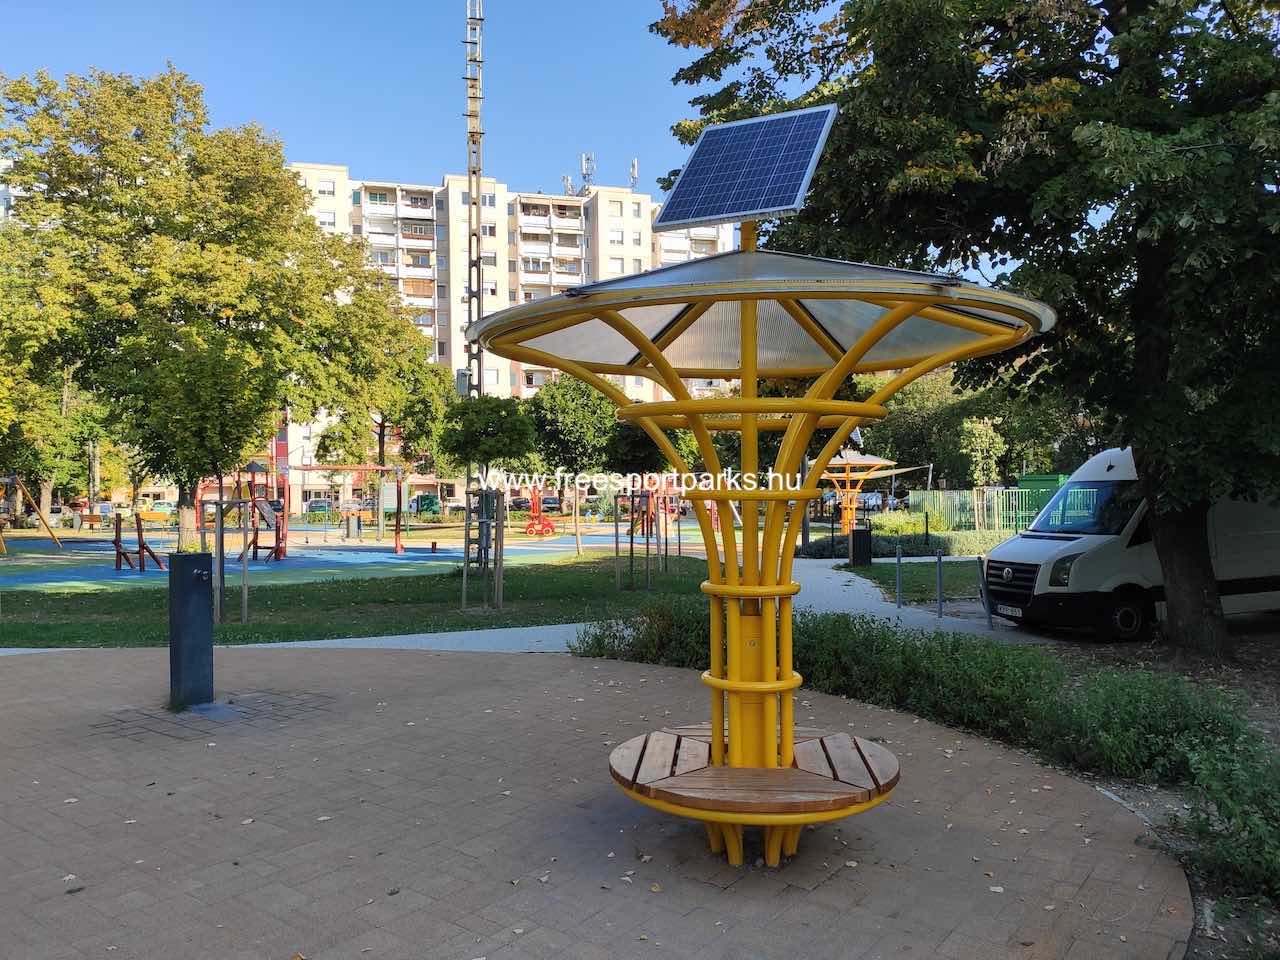 napelemes, fedett körpad - Say Ferenc utcai park, Siófok - Free Sport Parks blog